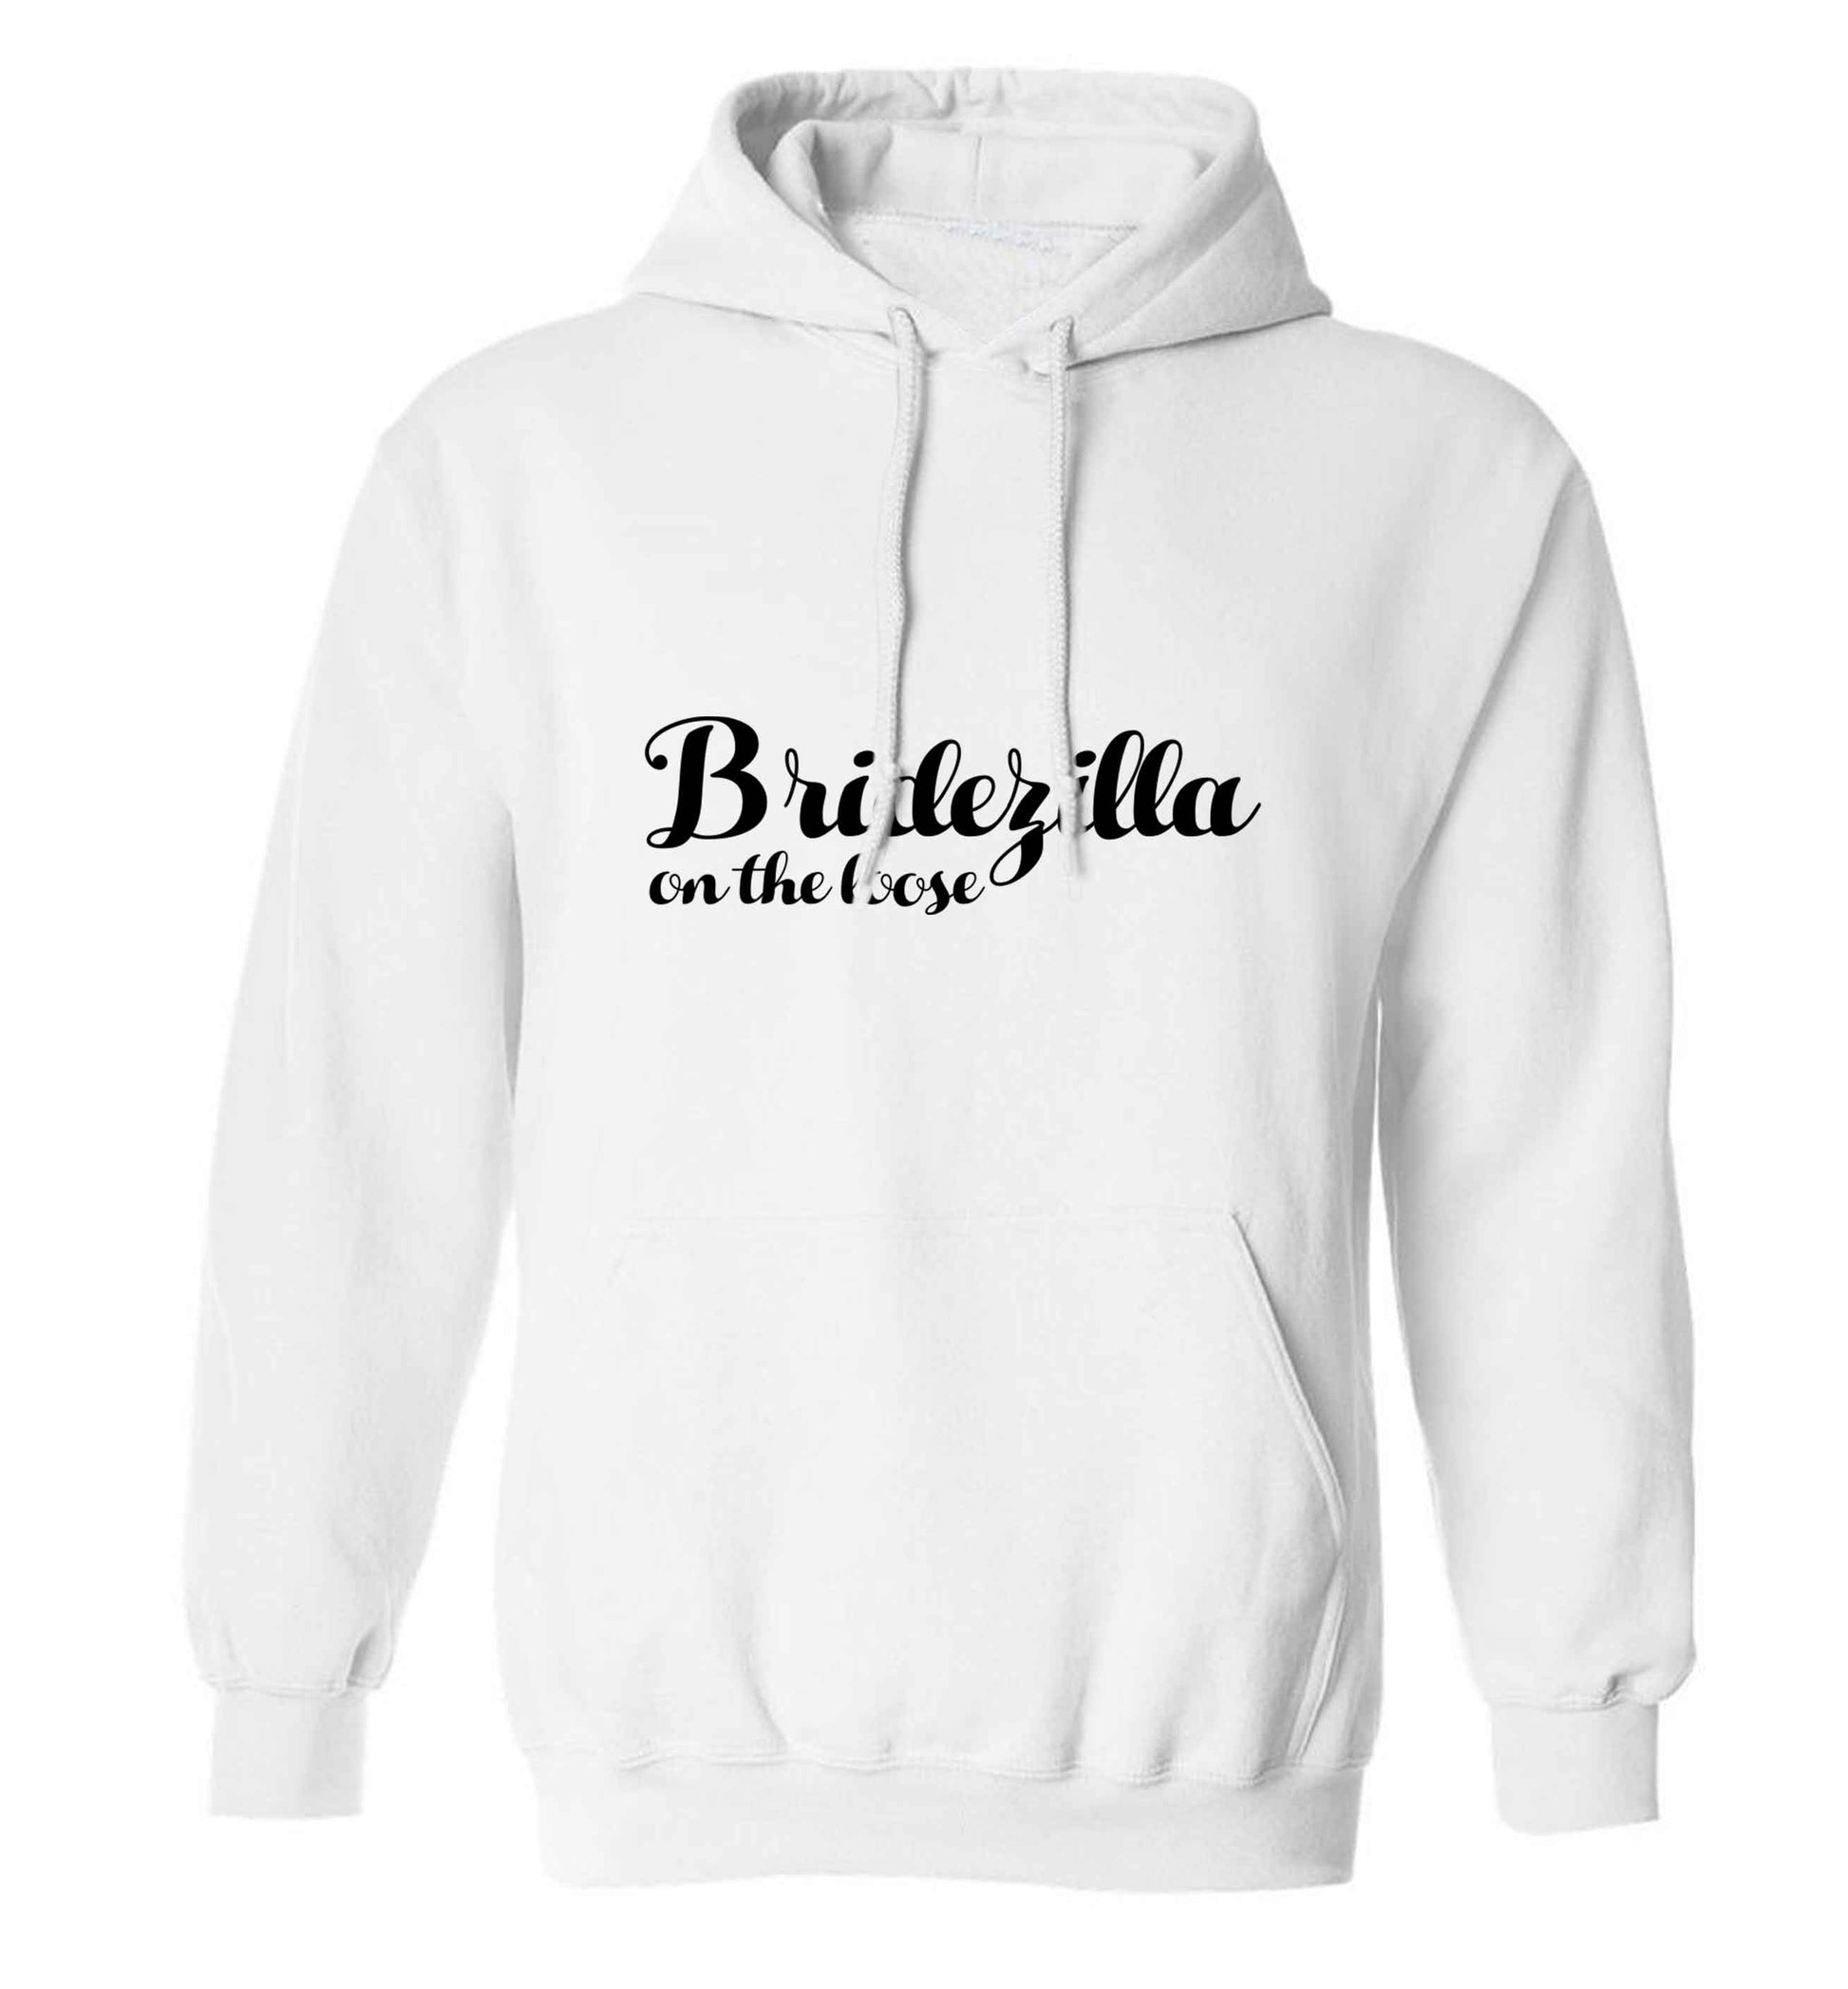 Bridezilla on the loose adults unisex white hoodie 2XL